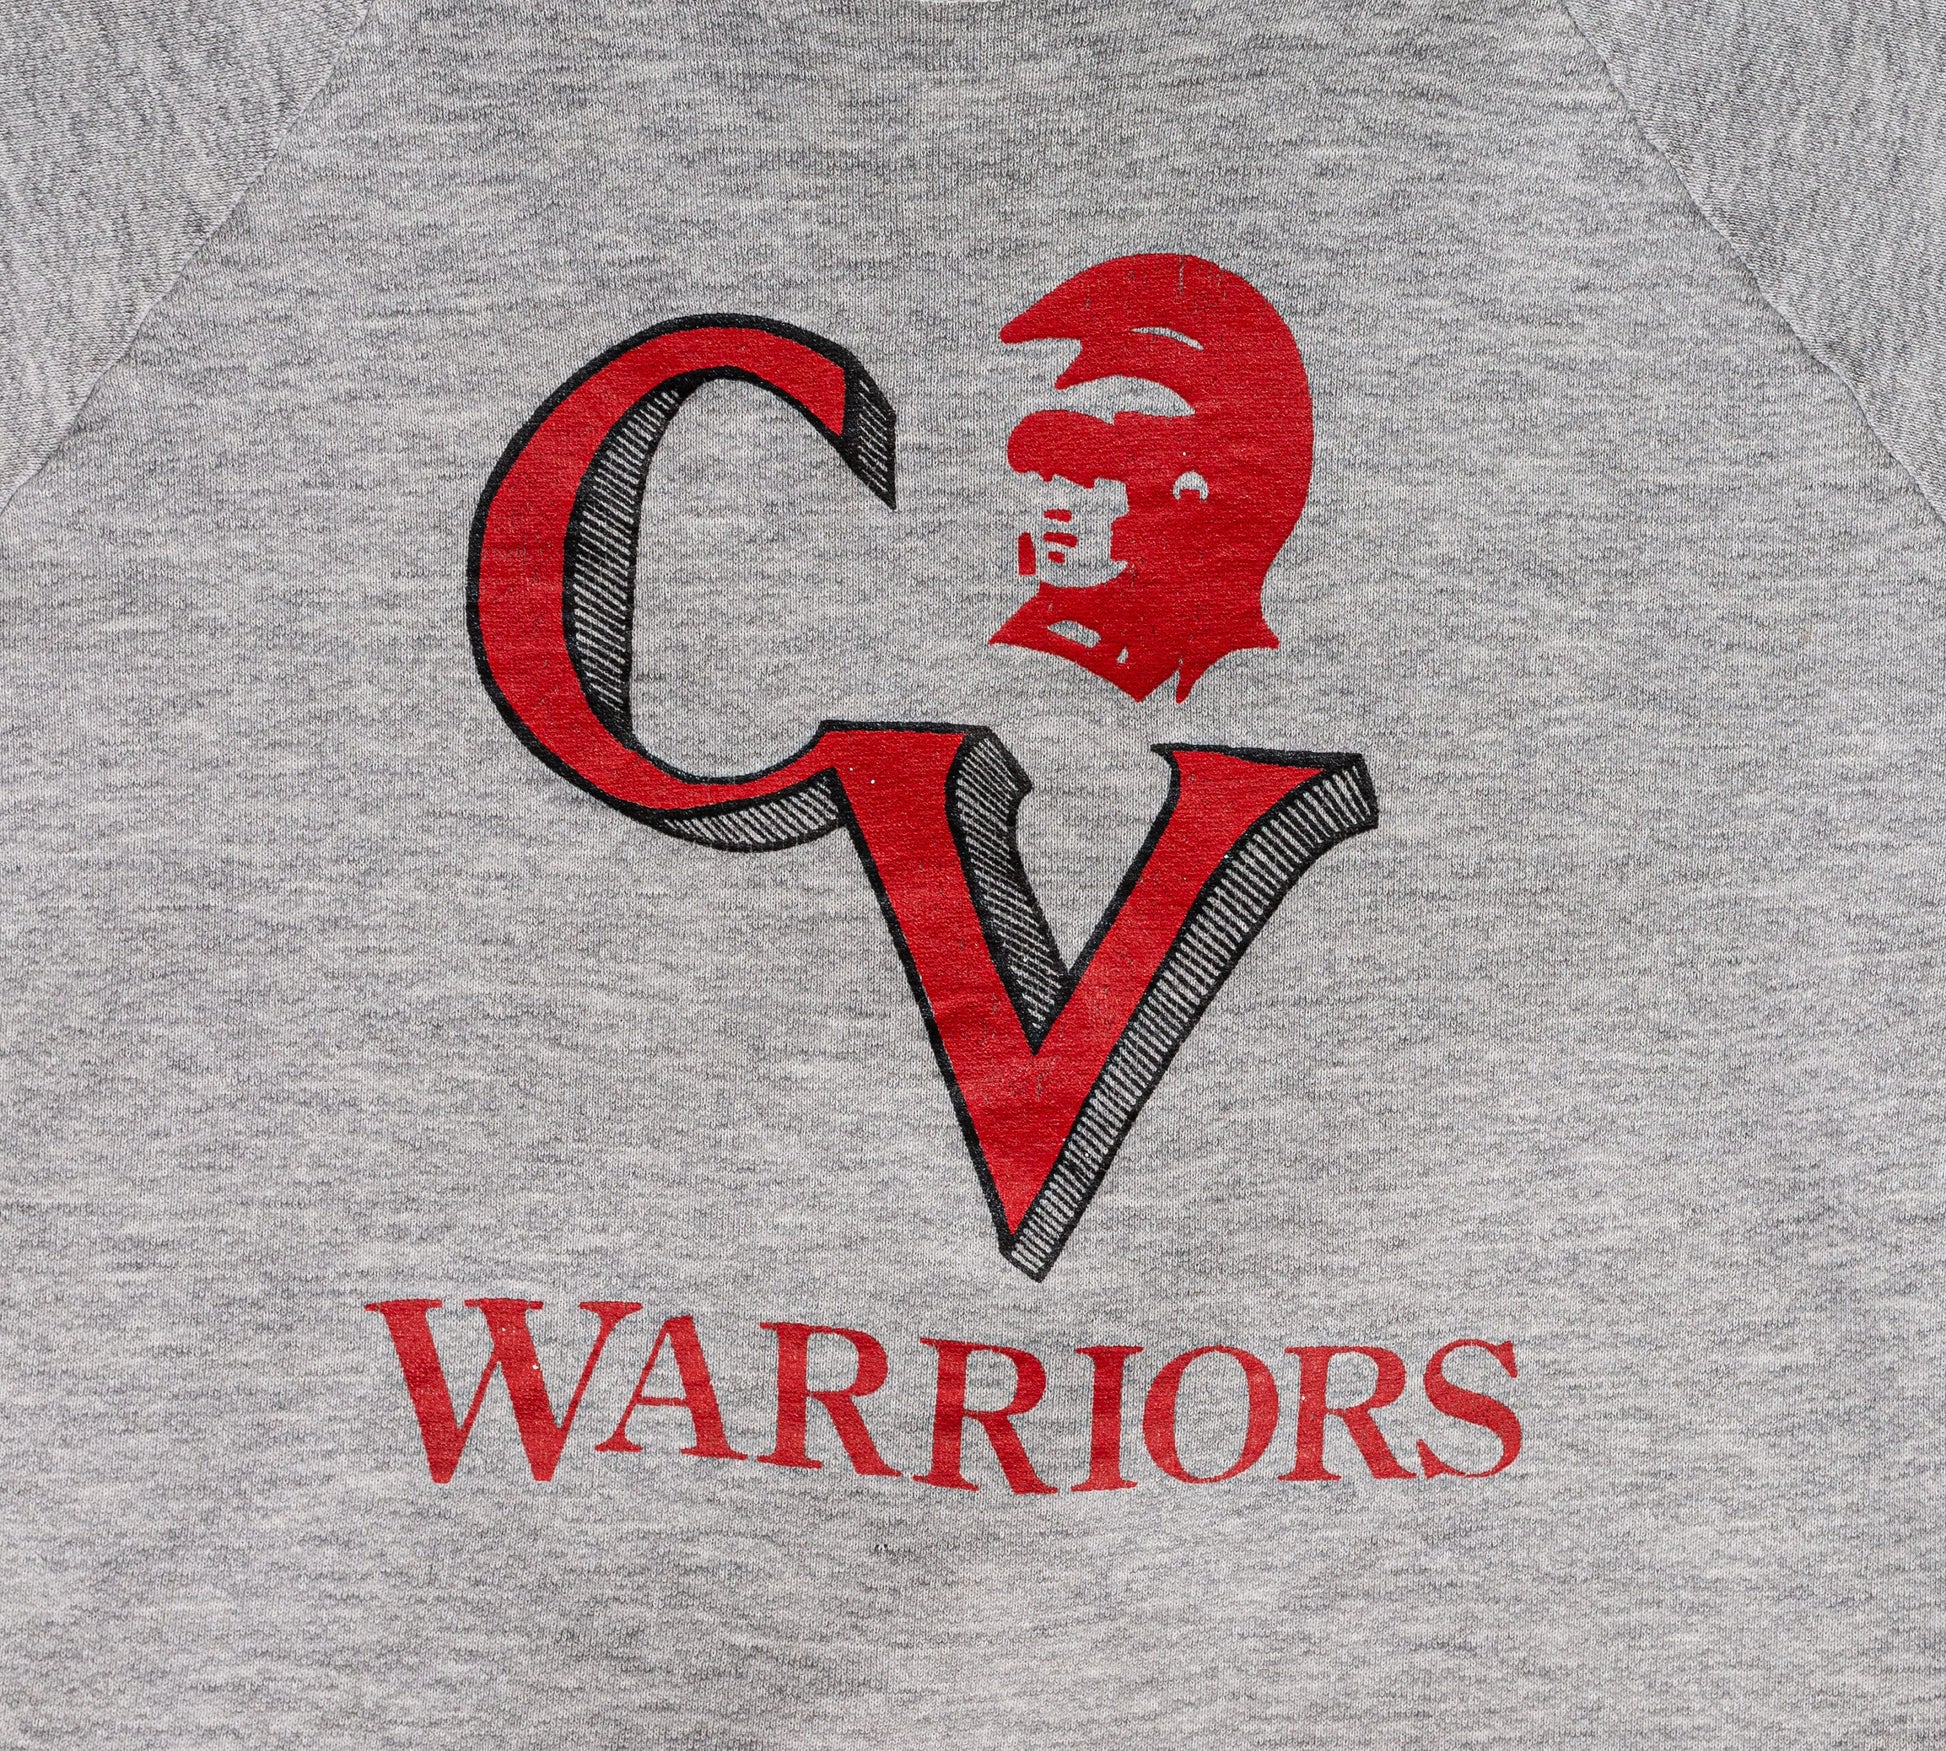 80s CV Warriors Sweatshirt - Men's Small, Women's Medium 